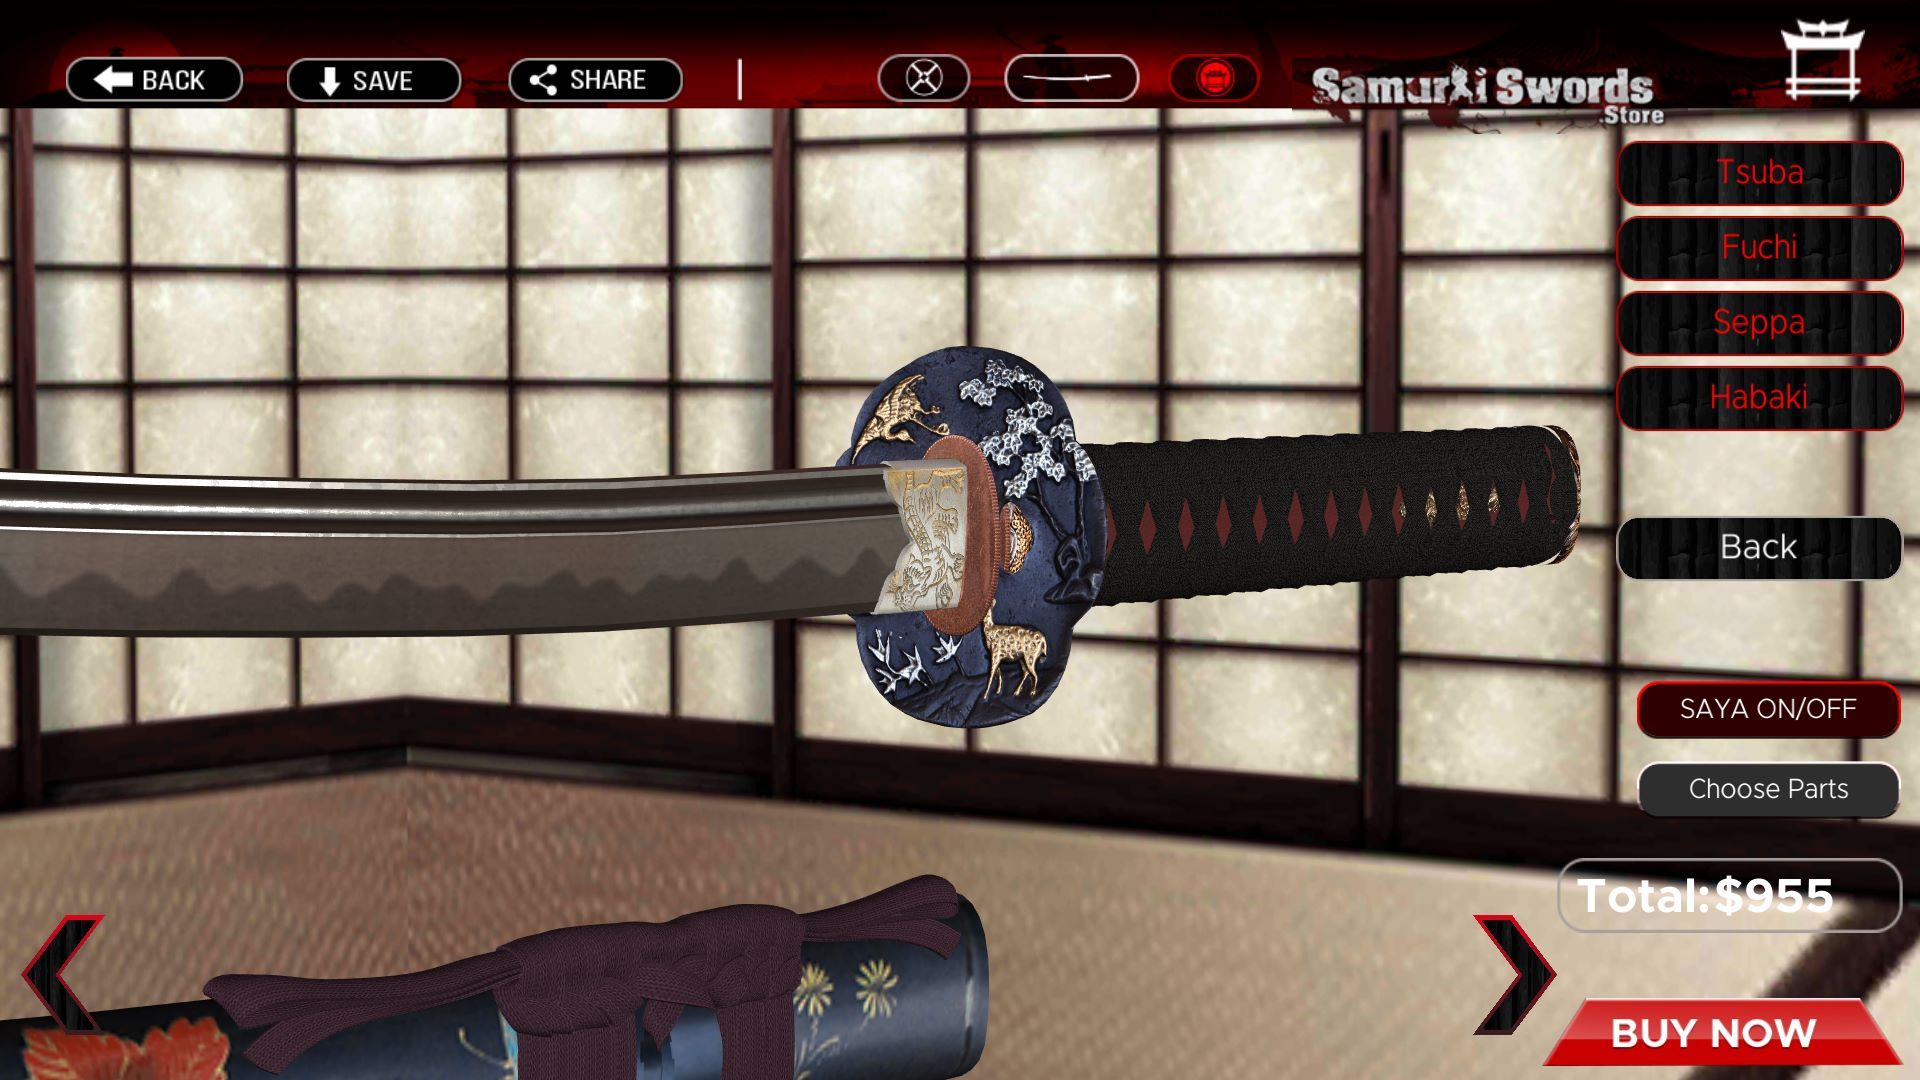 Samurai Swords Store - Create Your Own Custom Katana